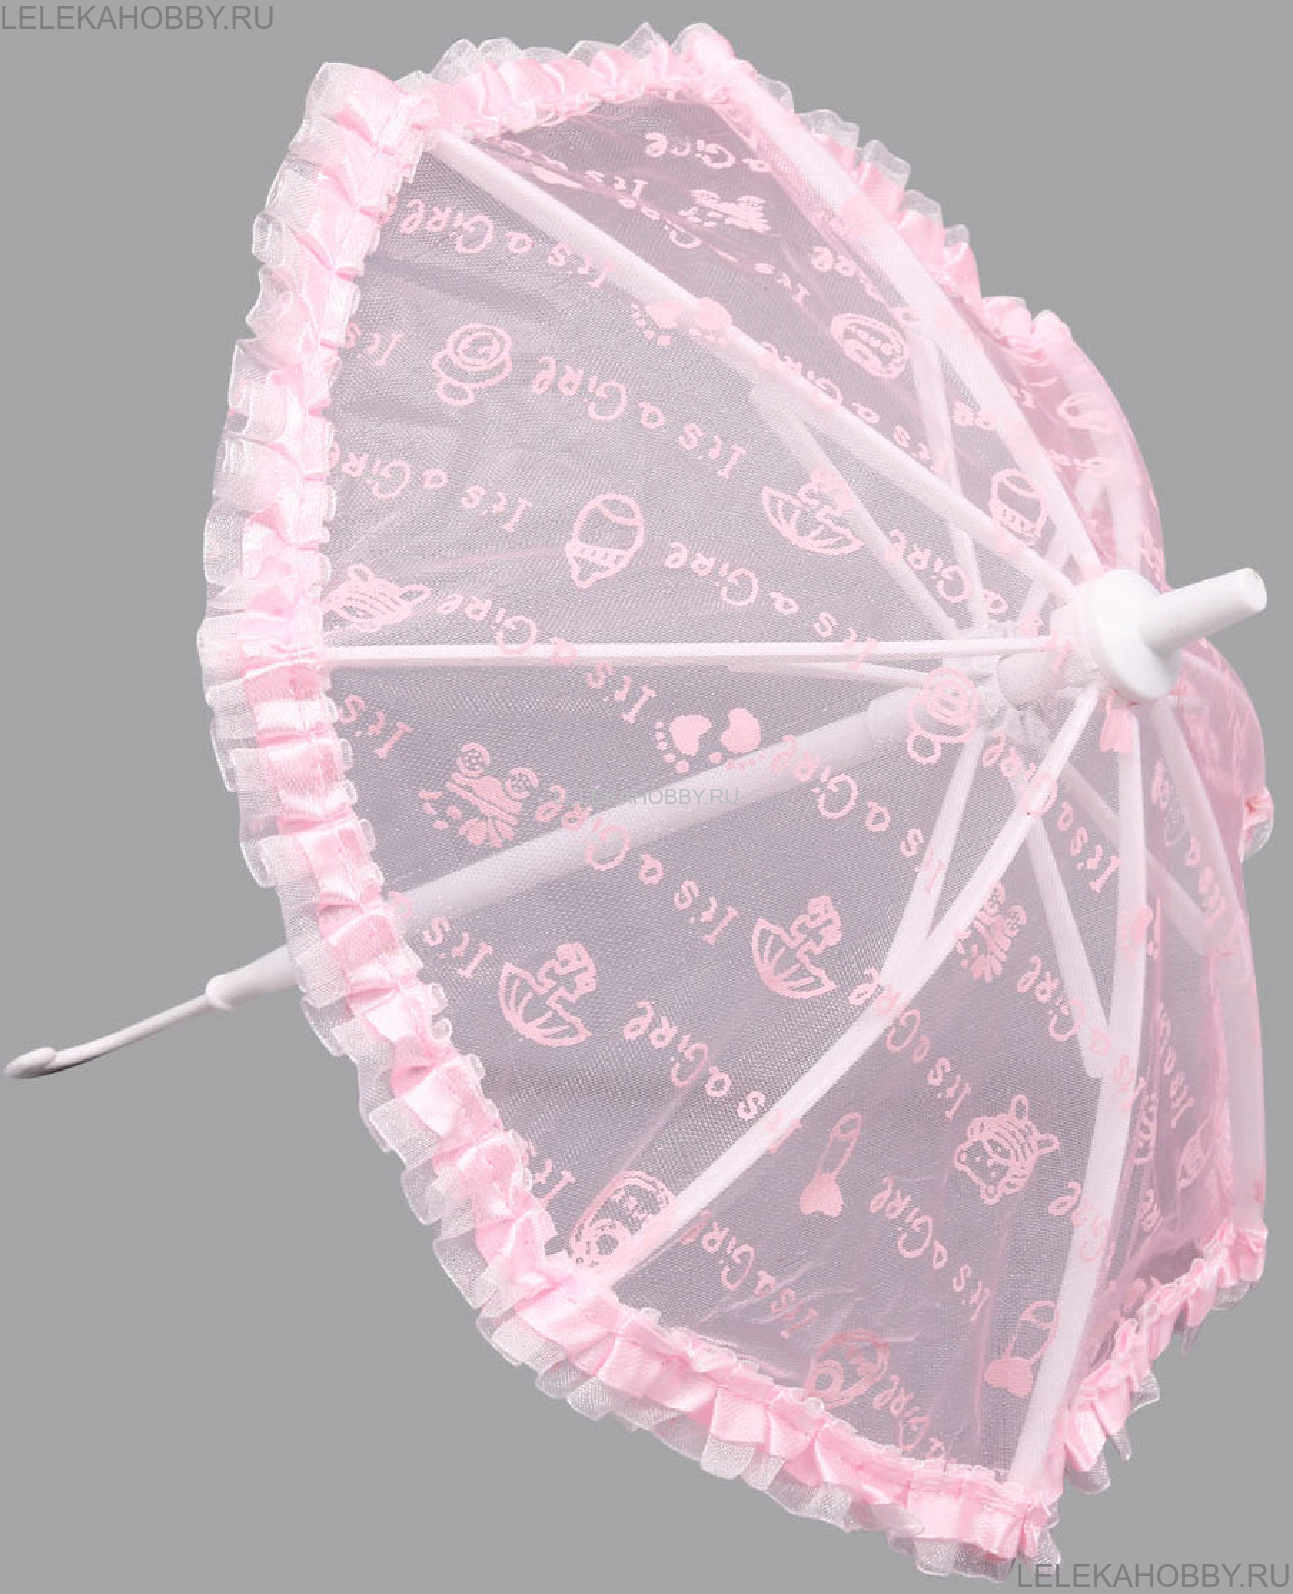 Зонтик для куклы. Ar760 зонтик голубой 26*25см. Игрушечный зонтик. Розовый зонт. Зонтик для кукол.